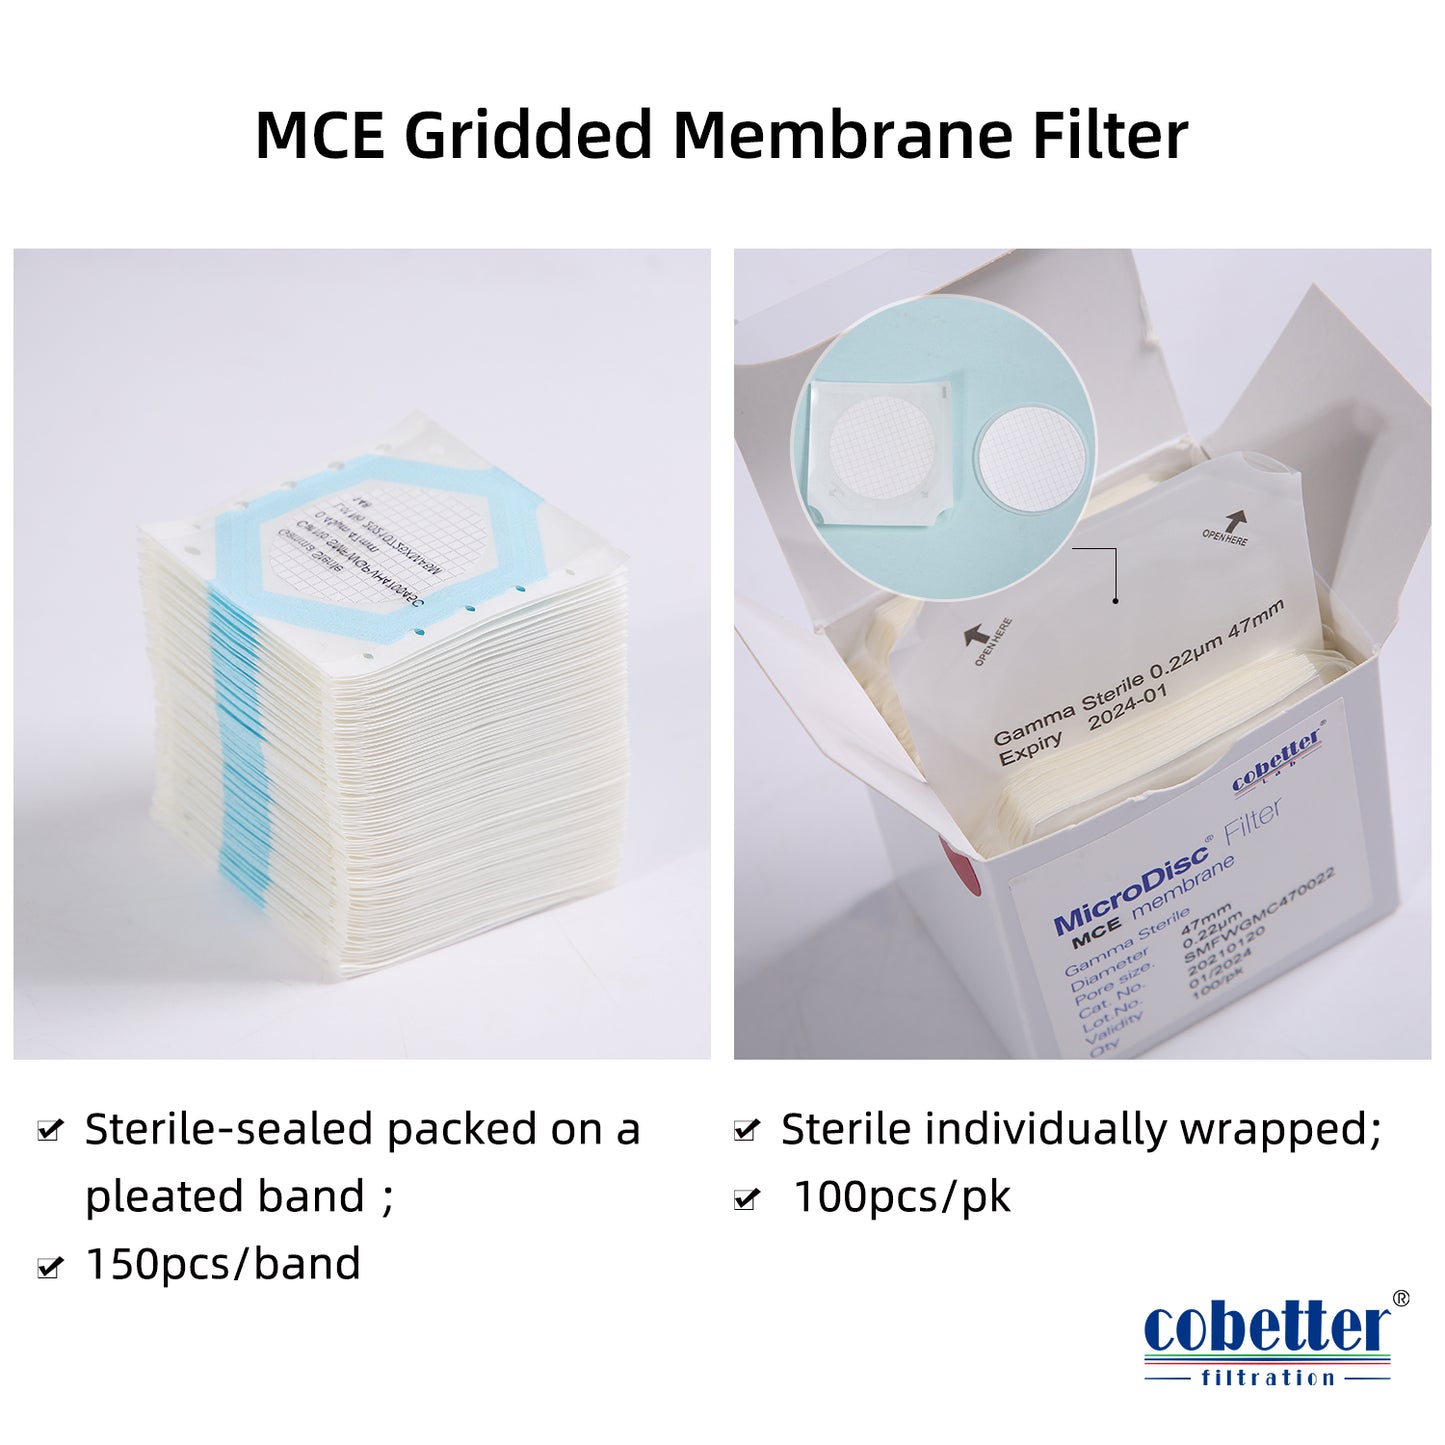 Gridded MCE membrane package